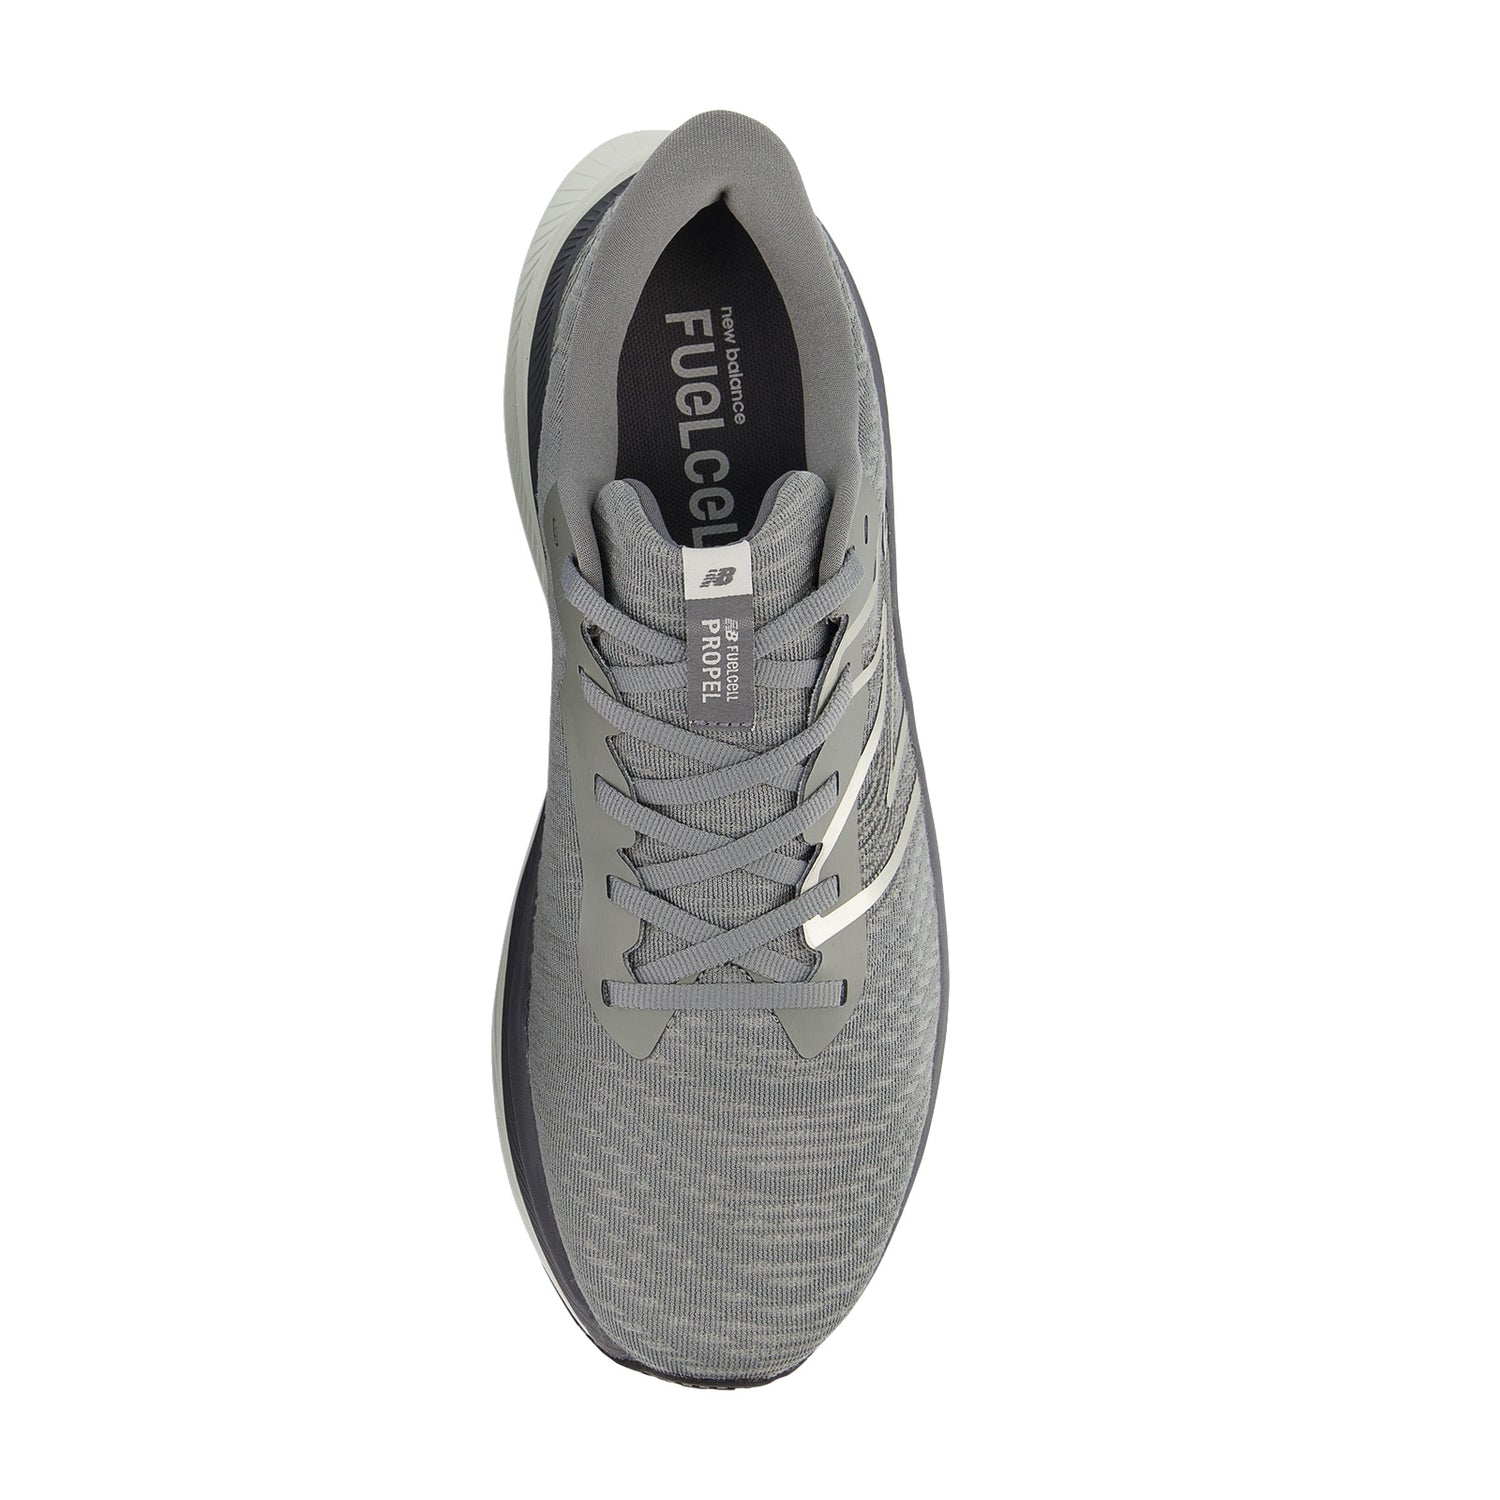 Peltz Shoes  Men's New Balance FuelCell Propel v4 Running Shoe Grey Tonal MFCPRCG4